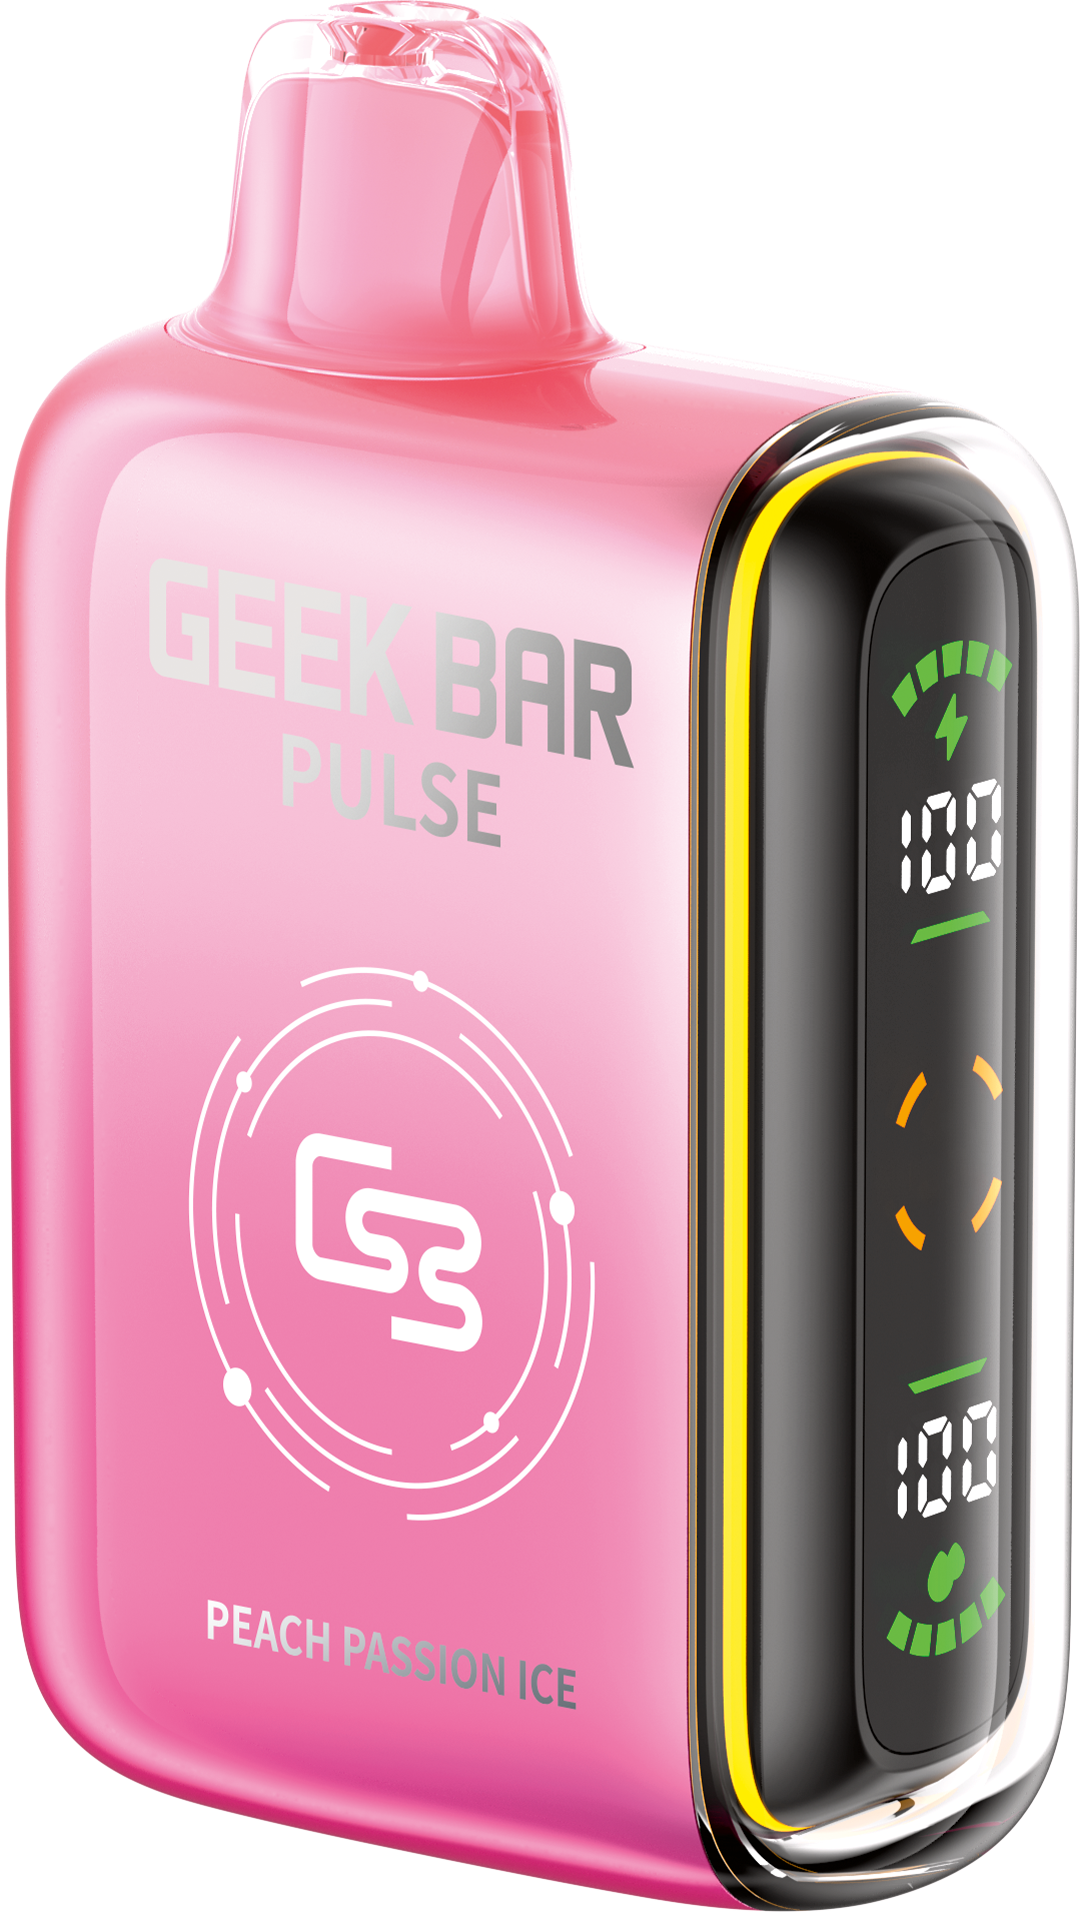 GeekBar Pulse - Peach Passion Ice